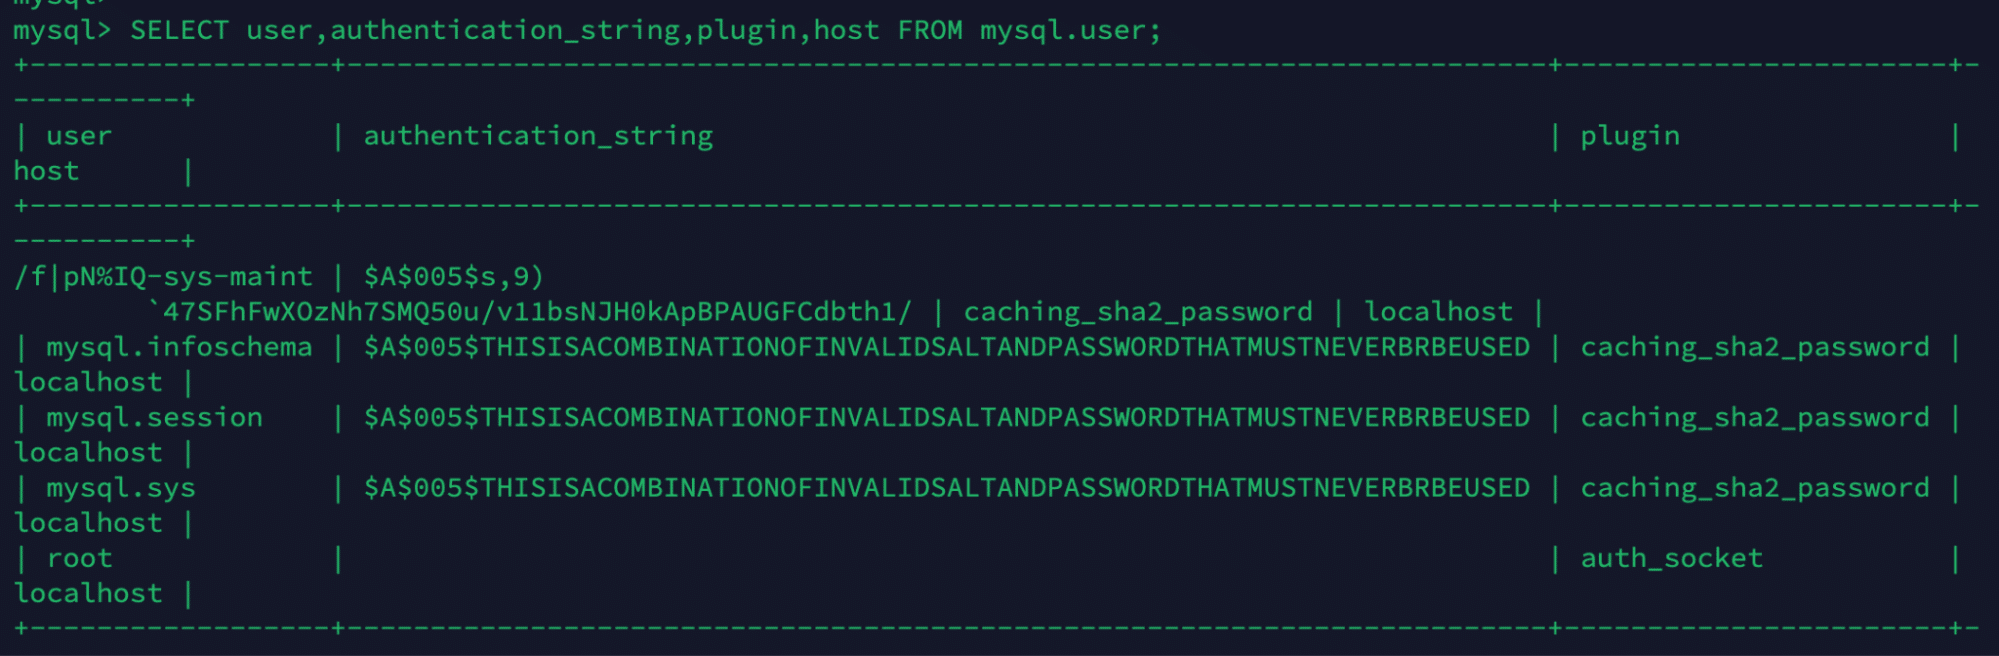 mysql SELECT user authentication